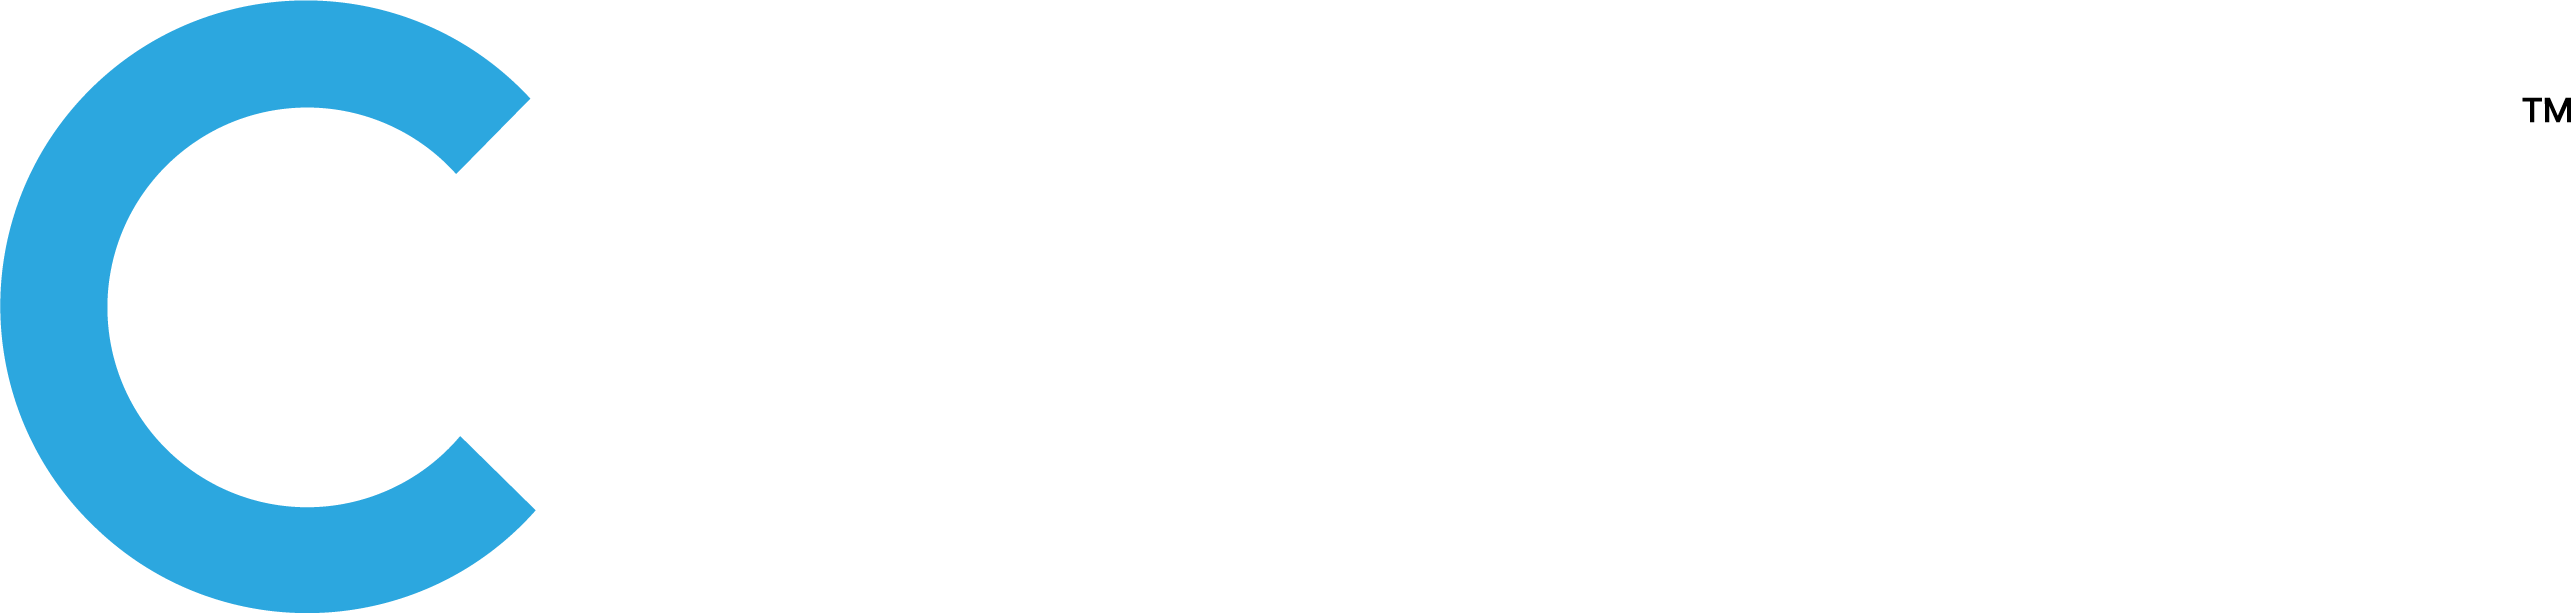 Cpacket Logo